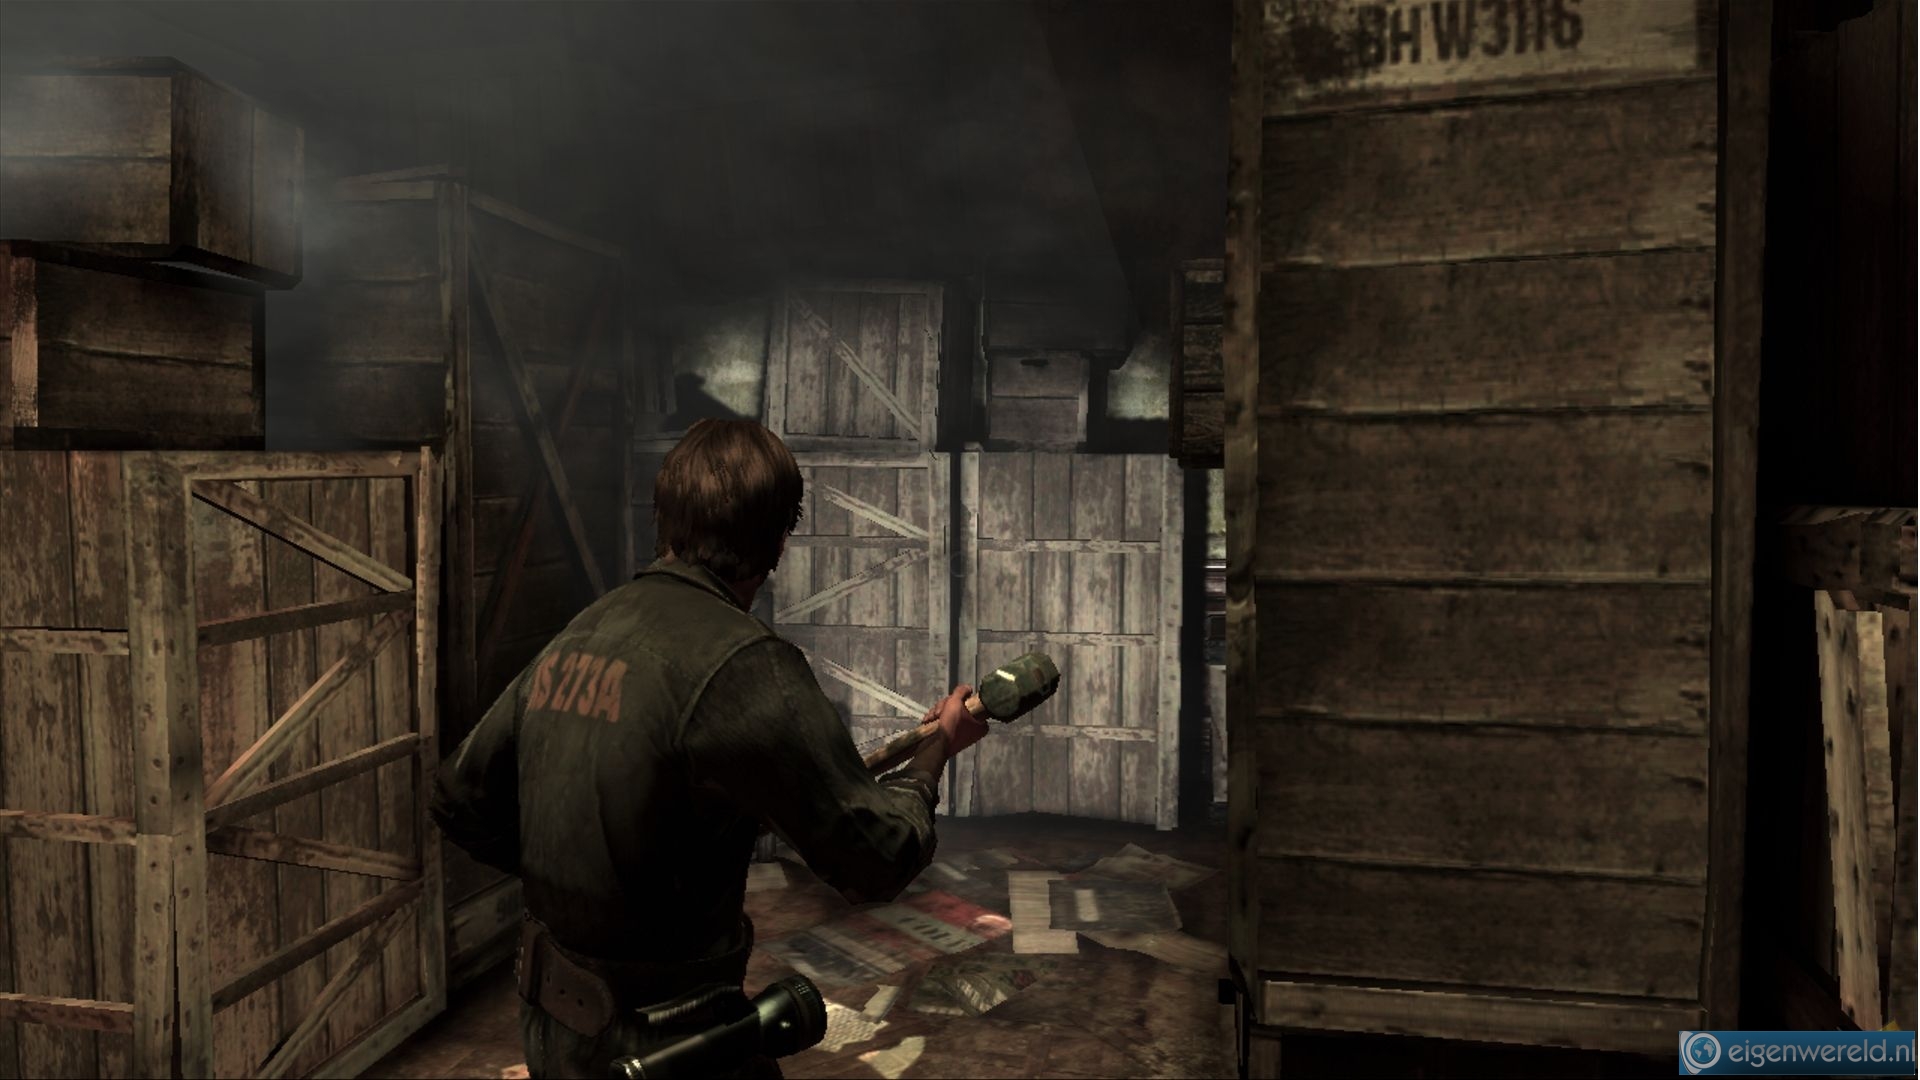 Screenshot van Silent Hill: Downpour